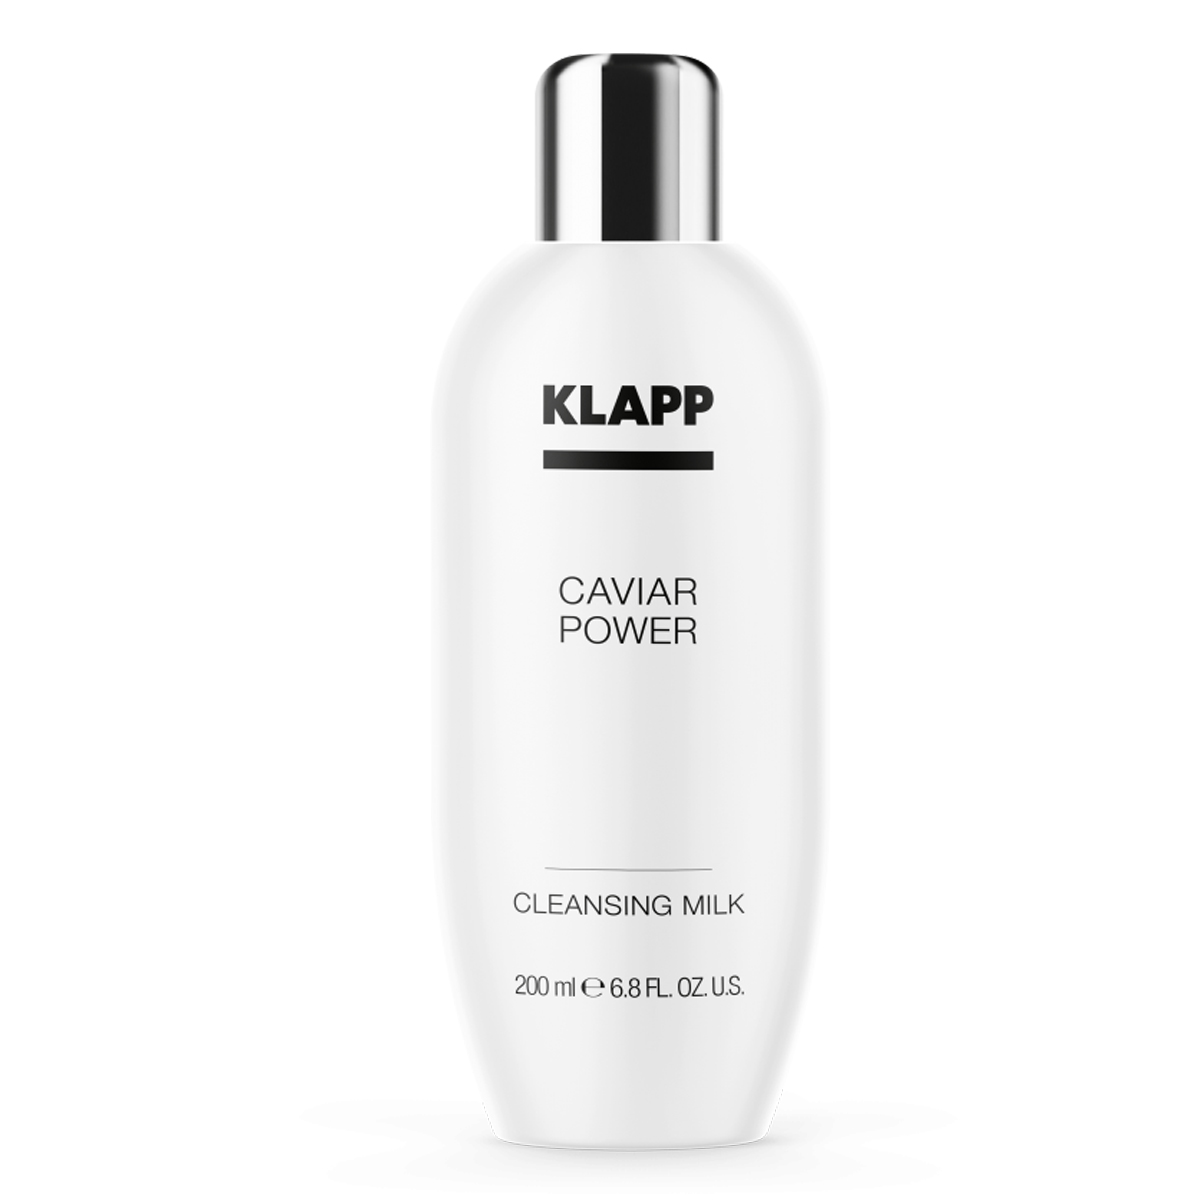 KLAPP Caviar Power Cleansing Milk 200 ml Cleanser